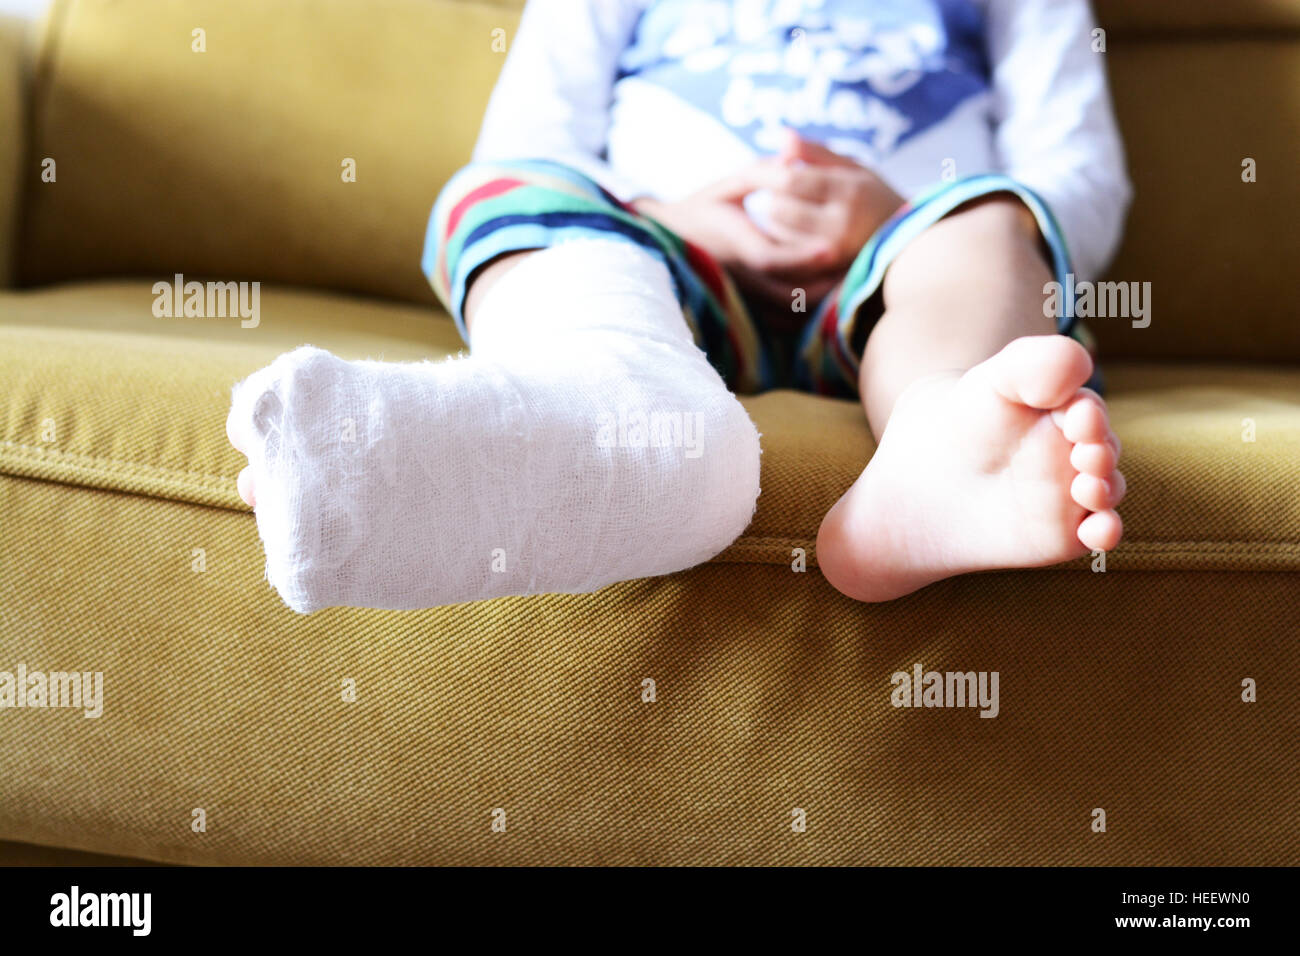 Little child with plaster bandage on leg heel fractured Stock Photo